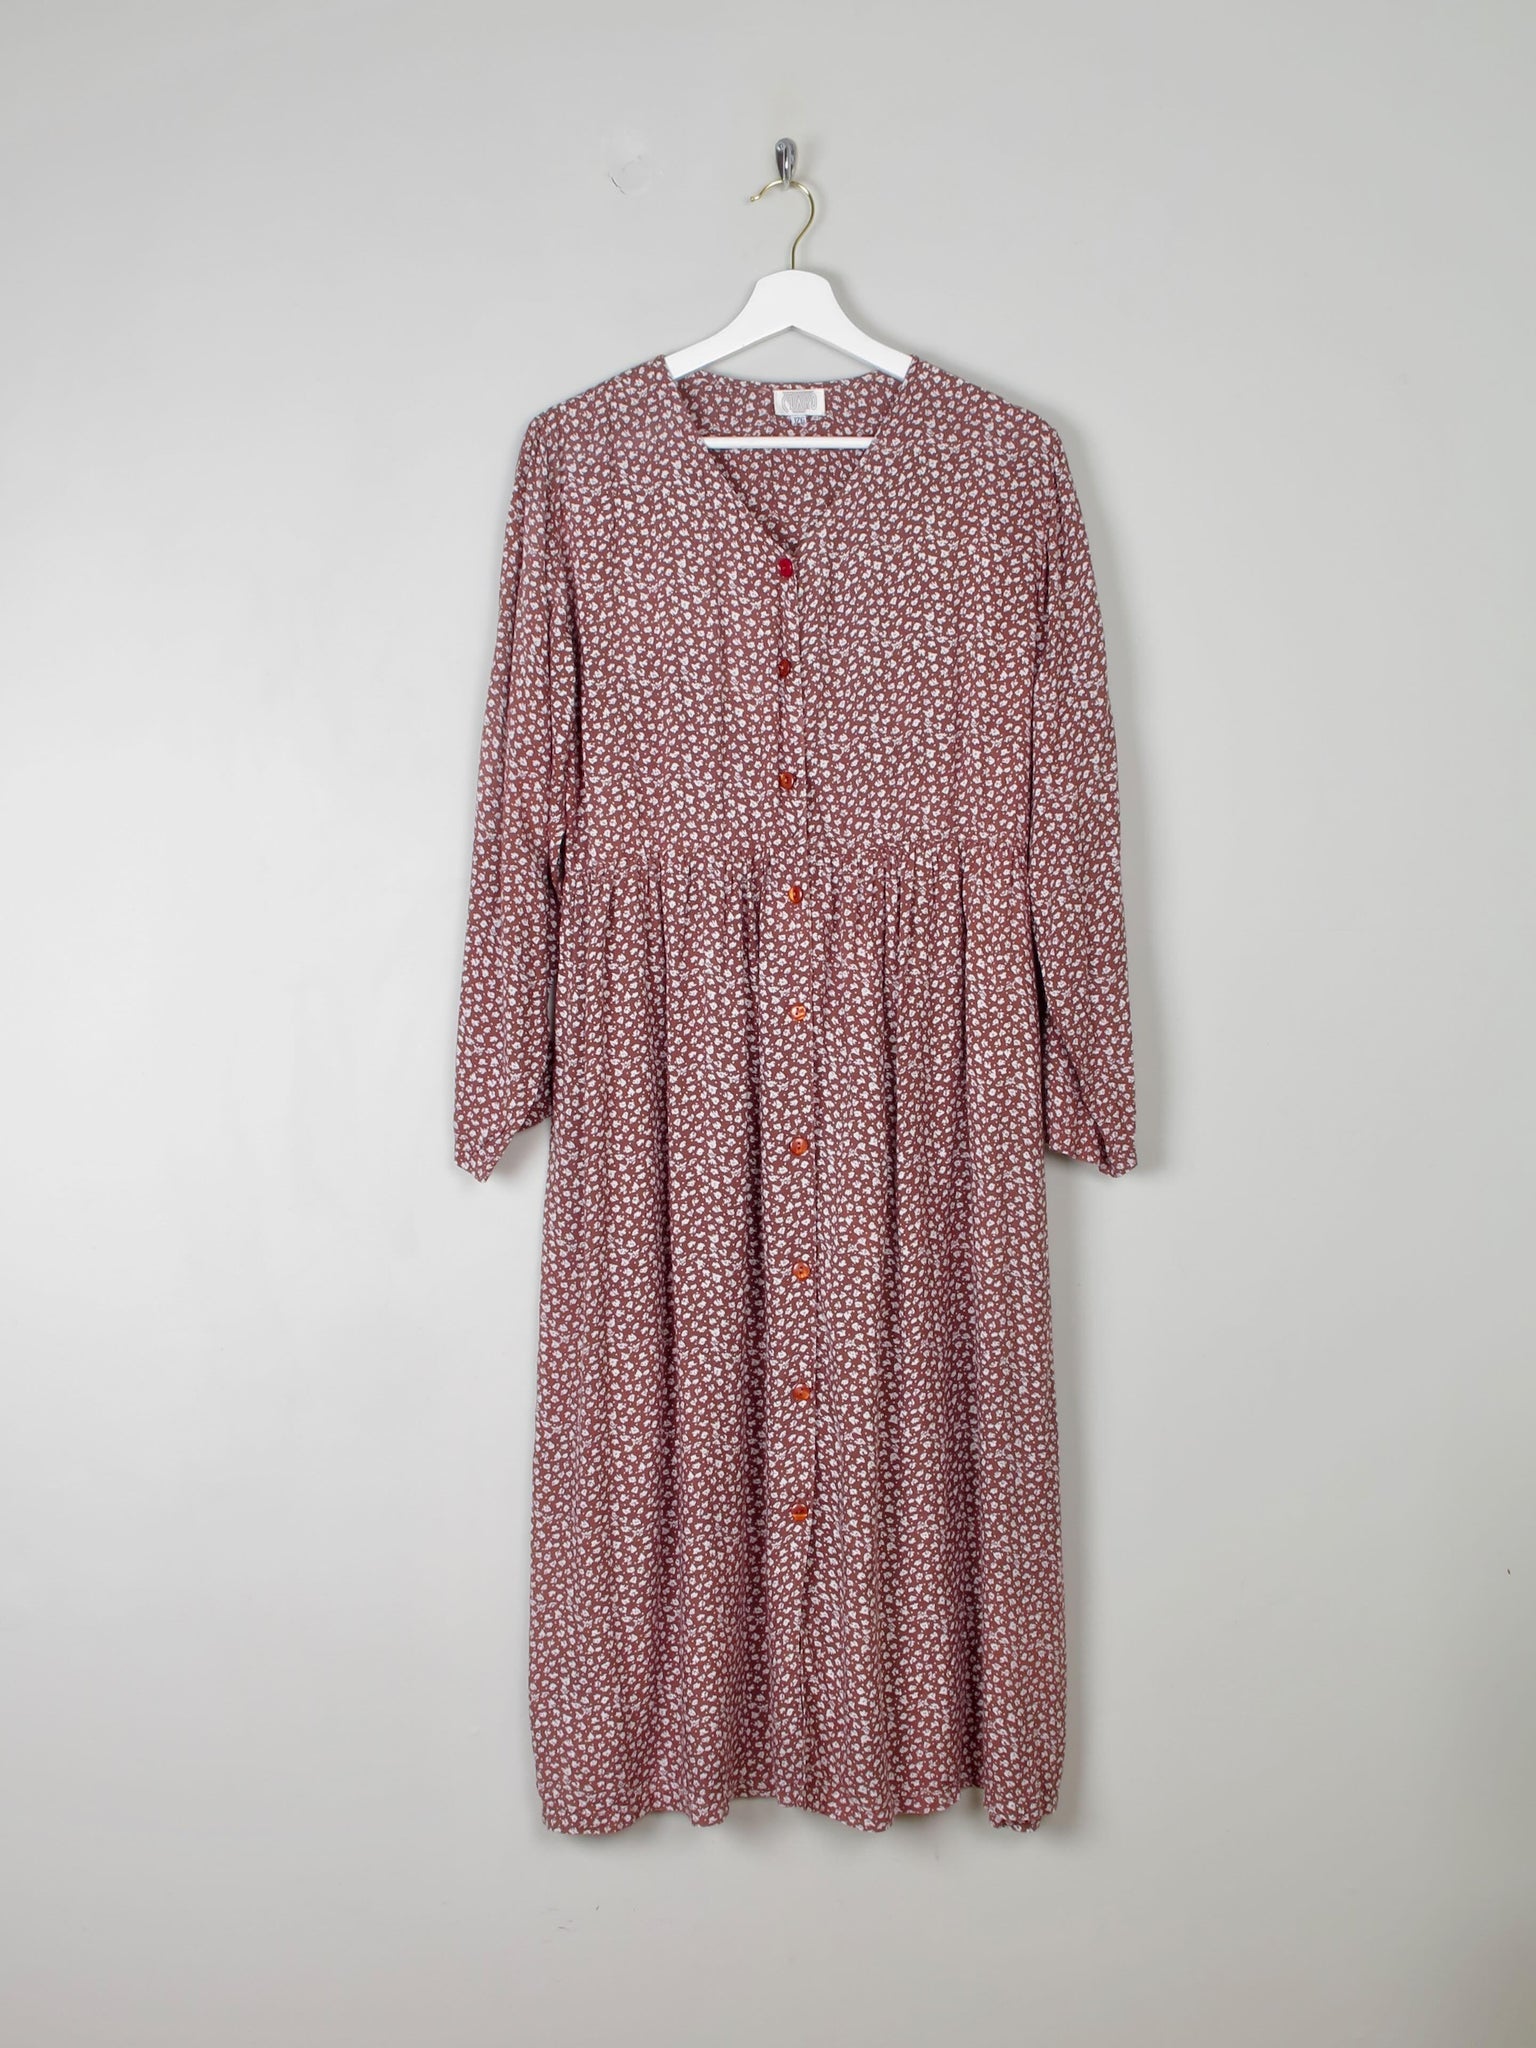 Vintage Floral Prairie Dress Brown & White Button Down S/M - The Harlequin